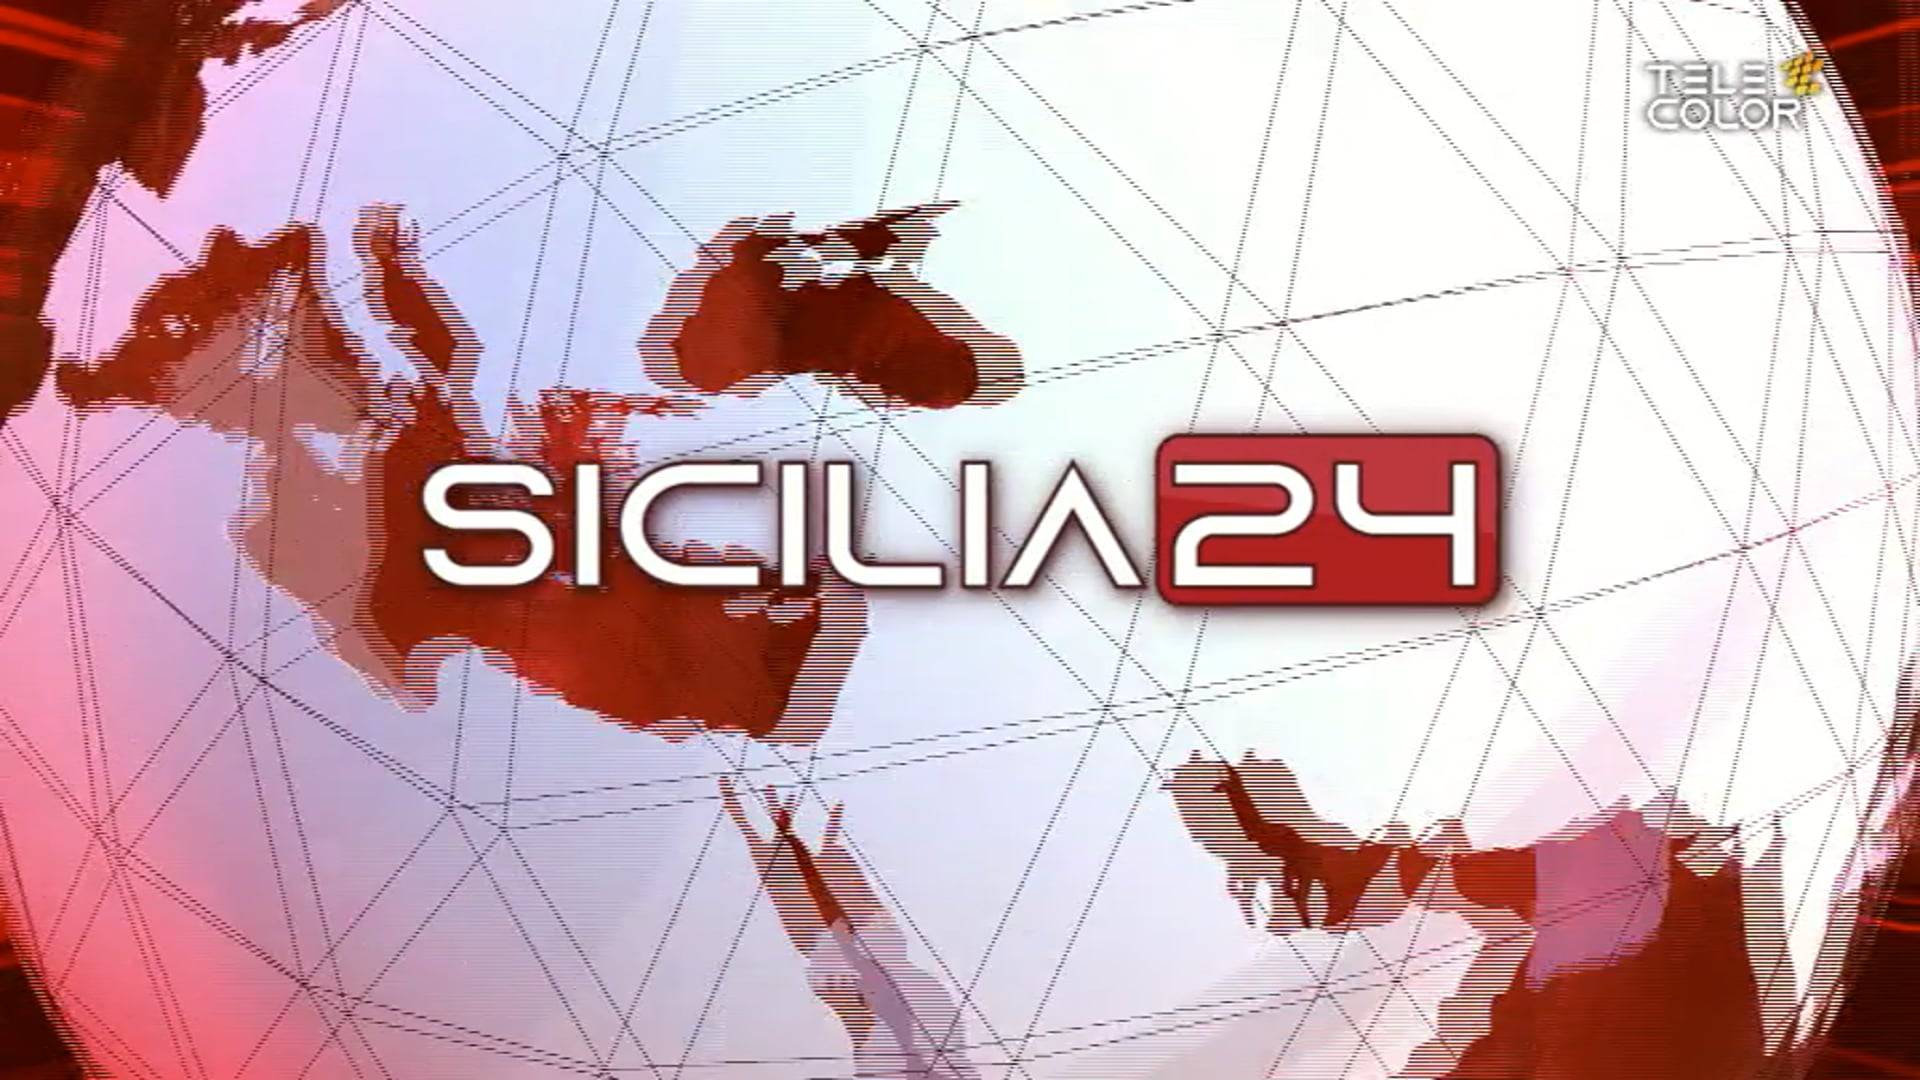 sicilia24-rassegna-stampa-30-marzo-2022-vimeo-thumbnail.jpg